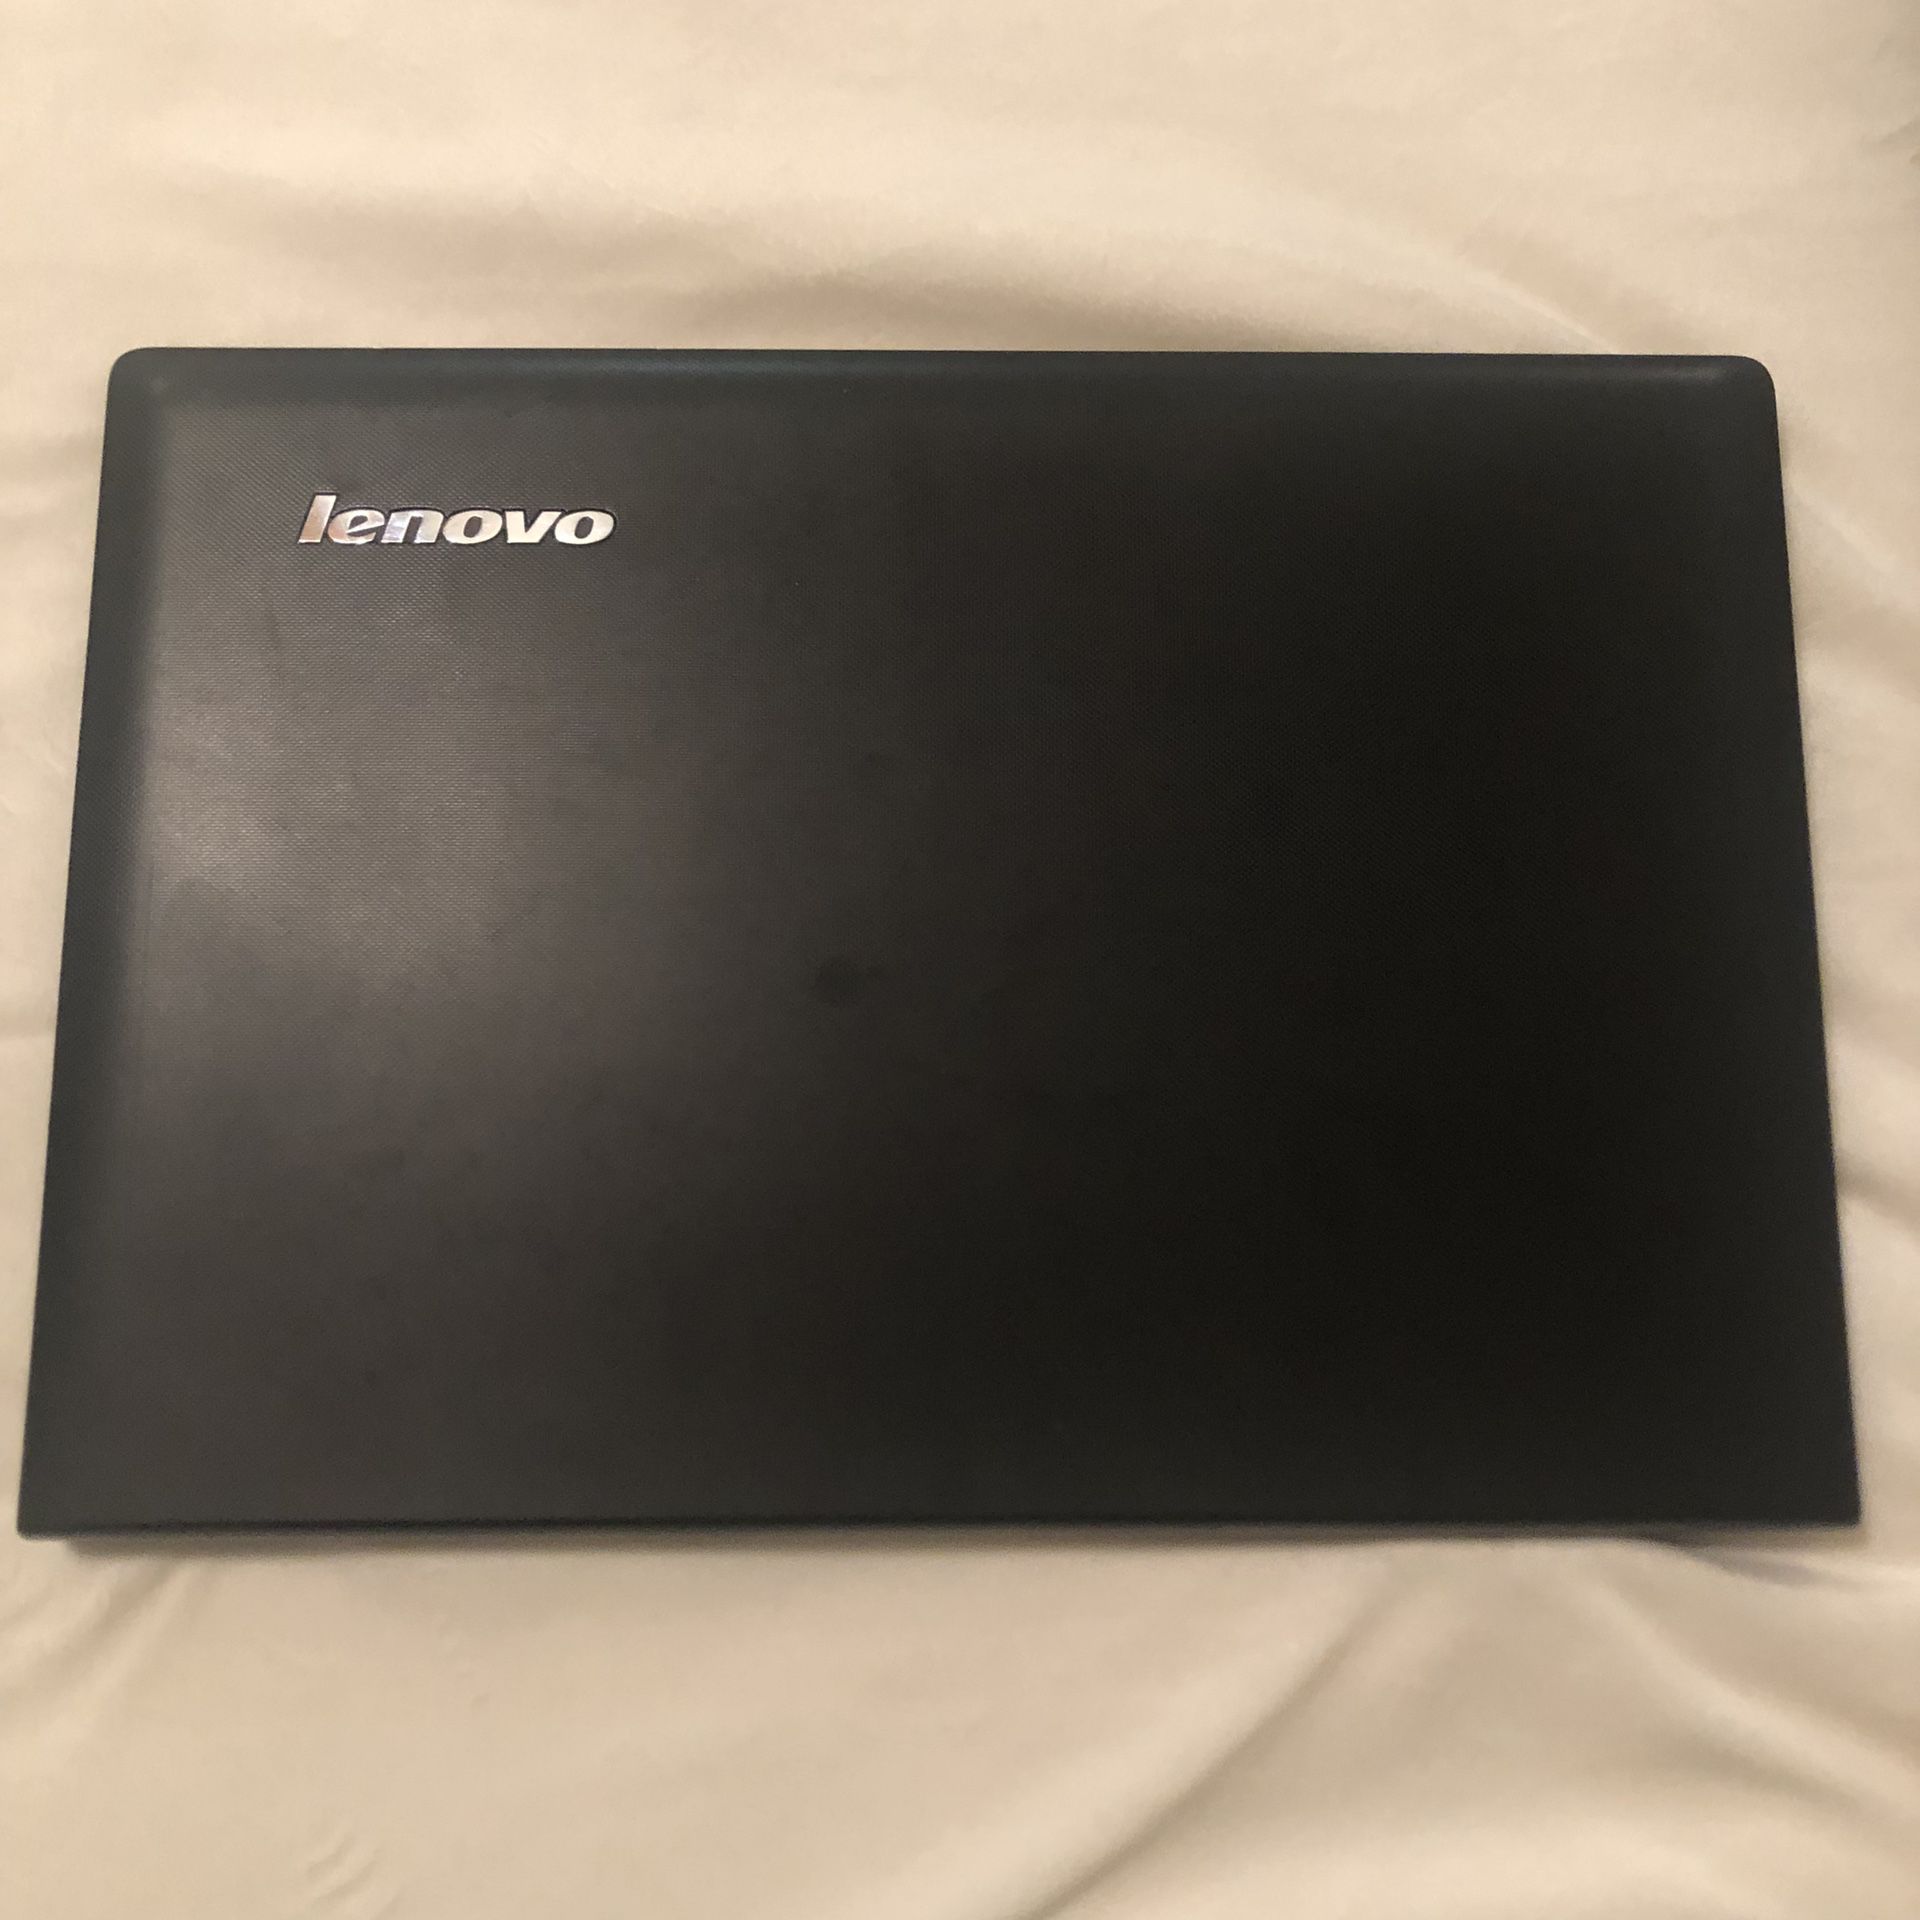 Lenovo G50-45 Windows 8 Laptop